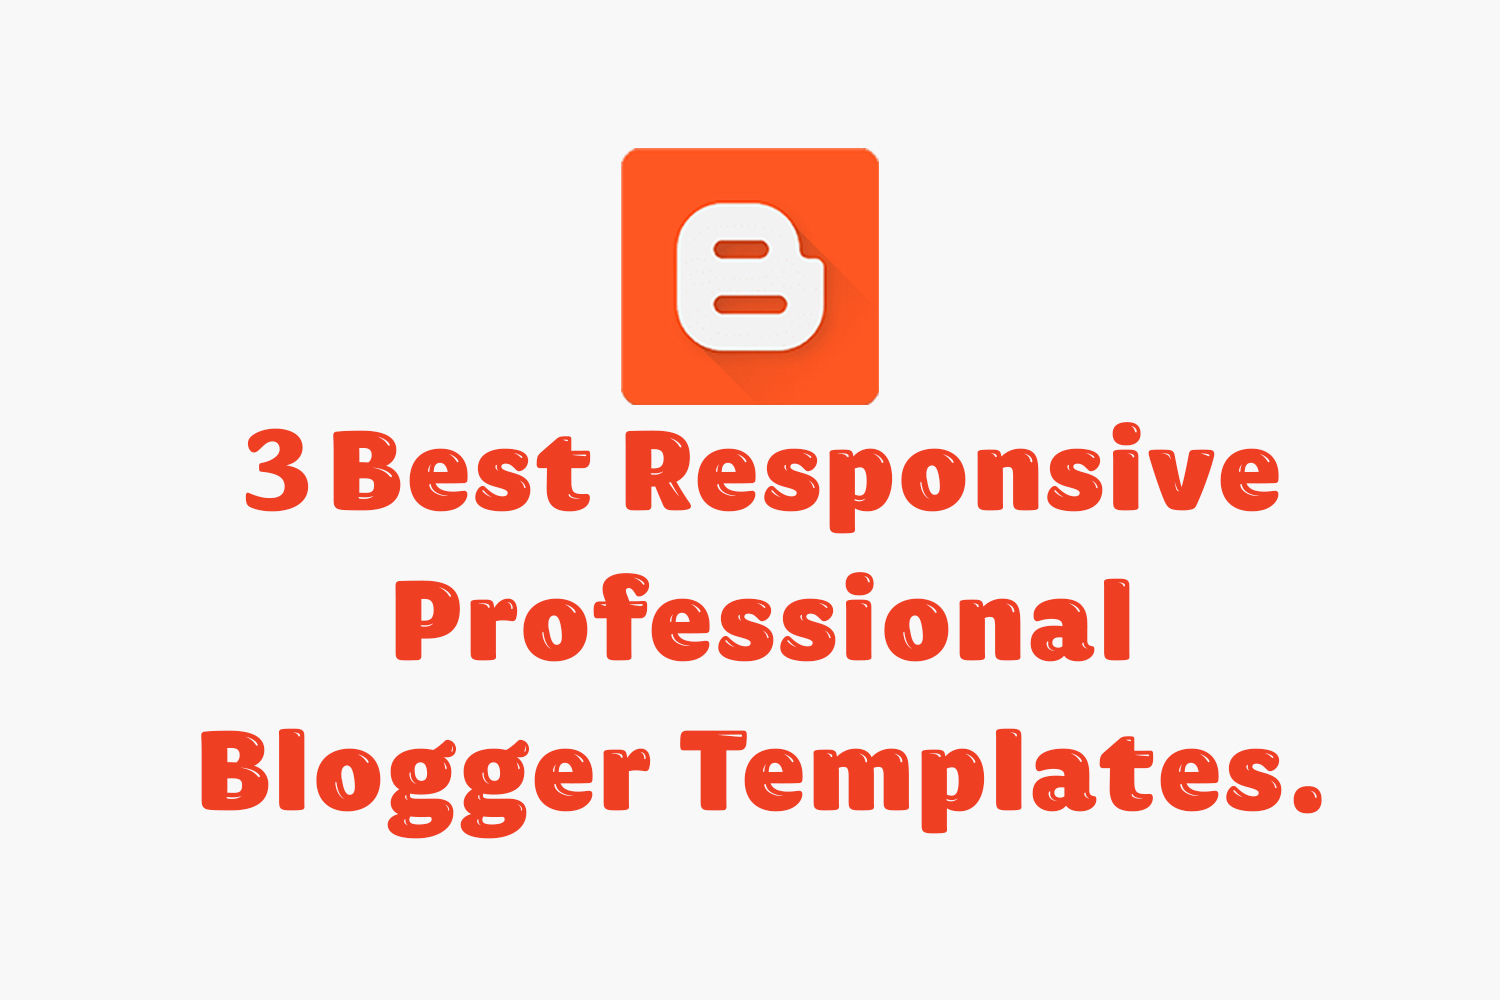 3 Best Responsive Blogger Templates for Blogger.com